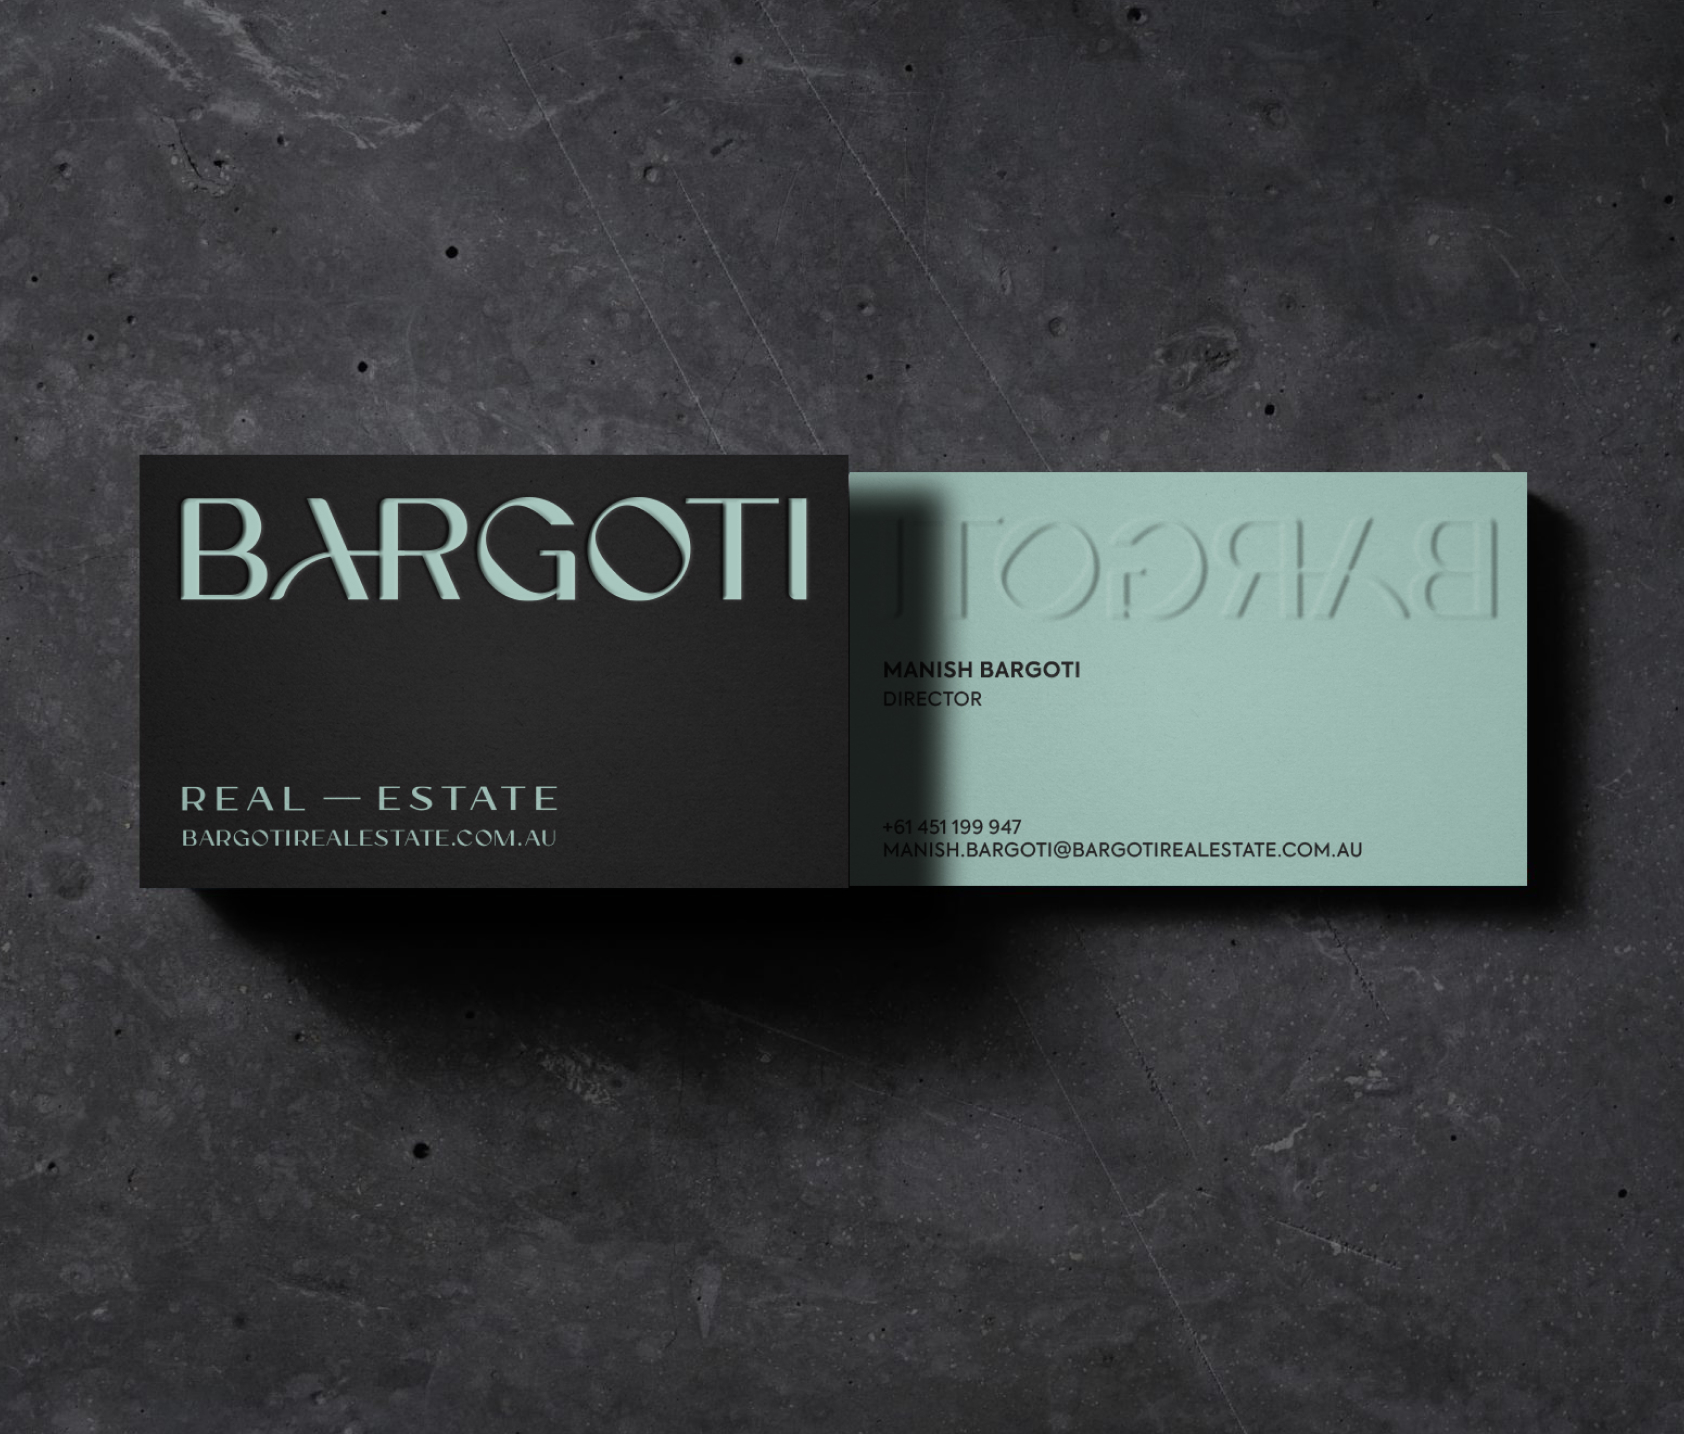 Bargoti Real Estate Branding, Signage & Design Development by TL Design Co.